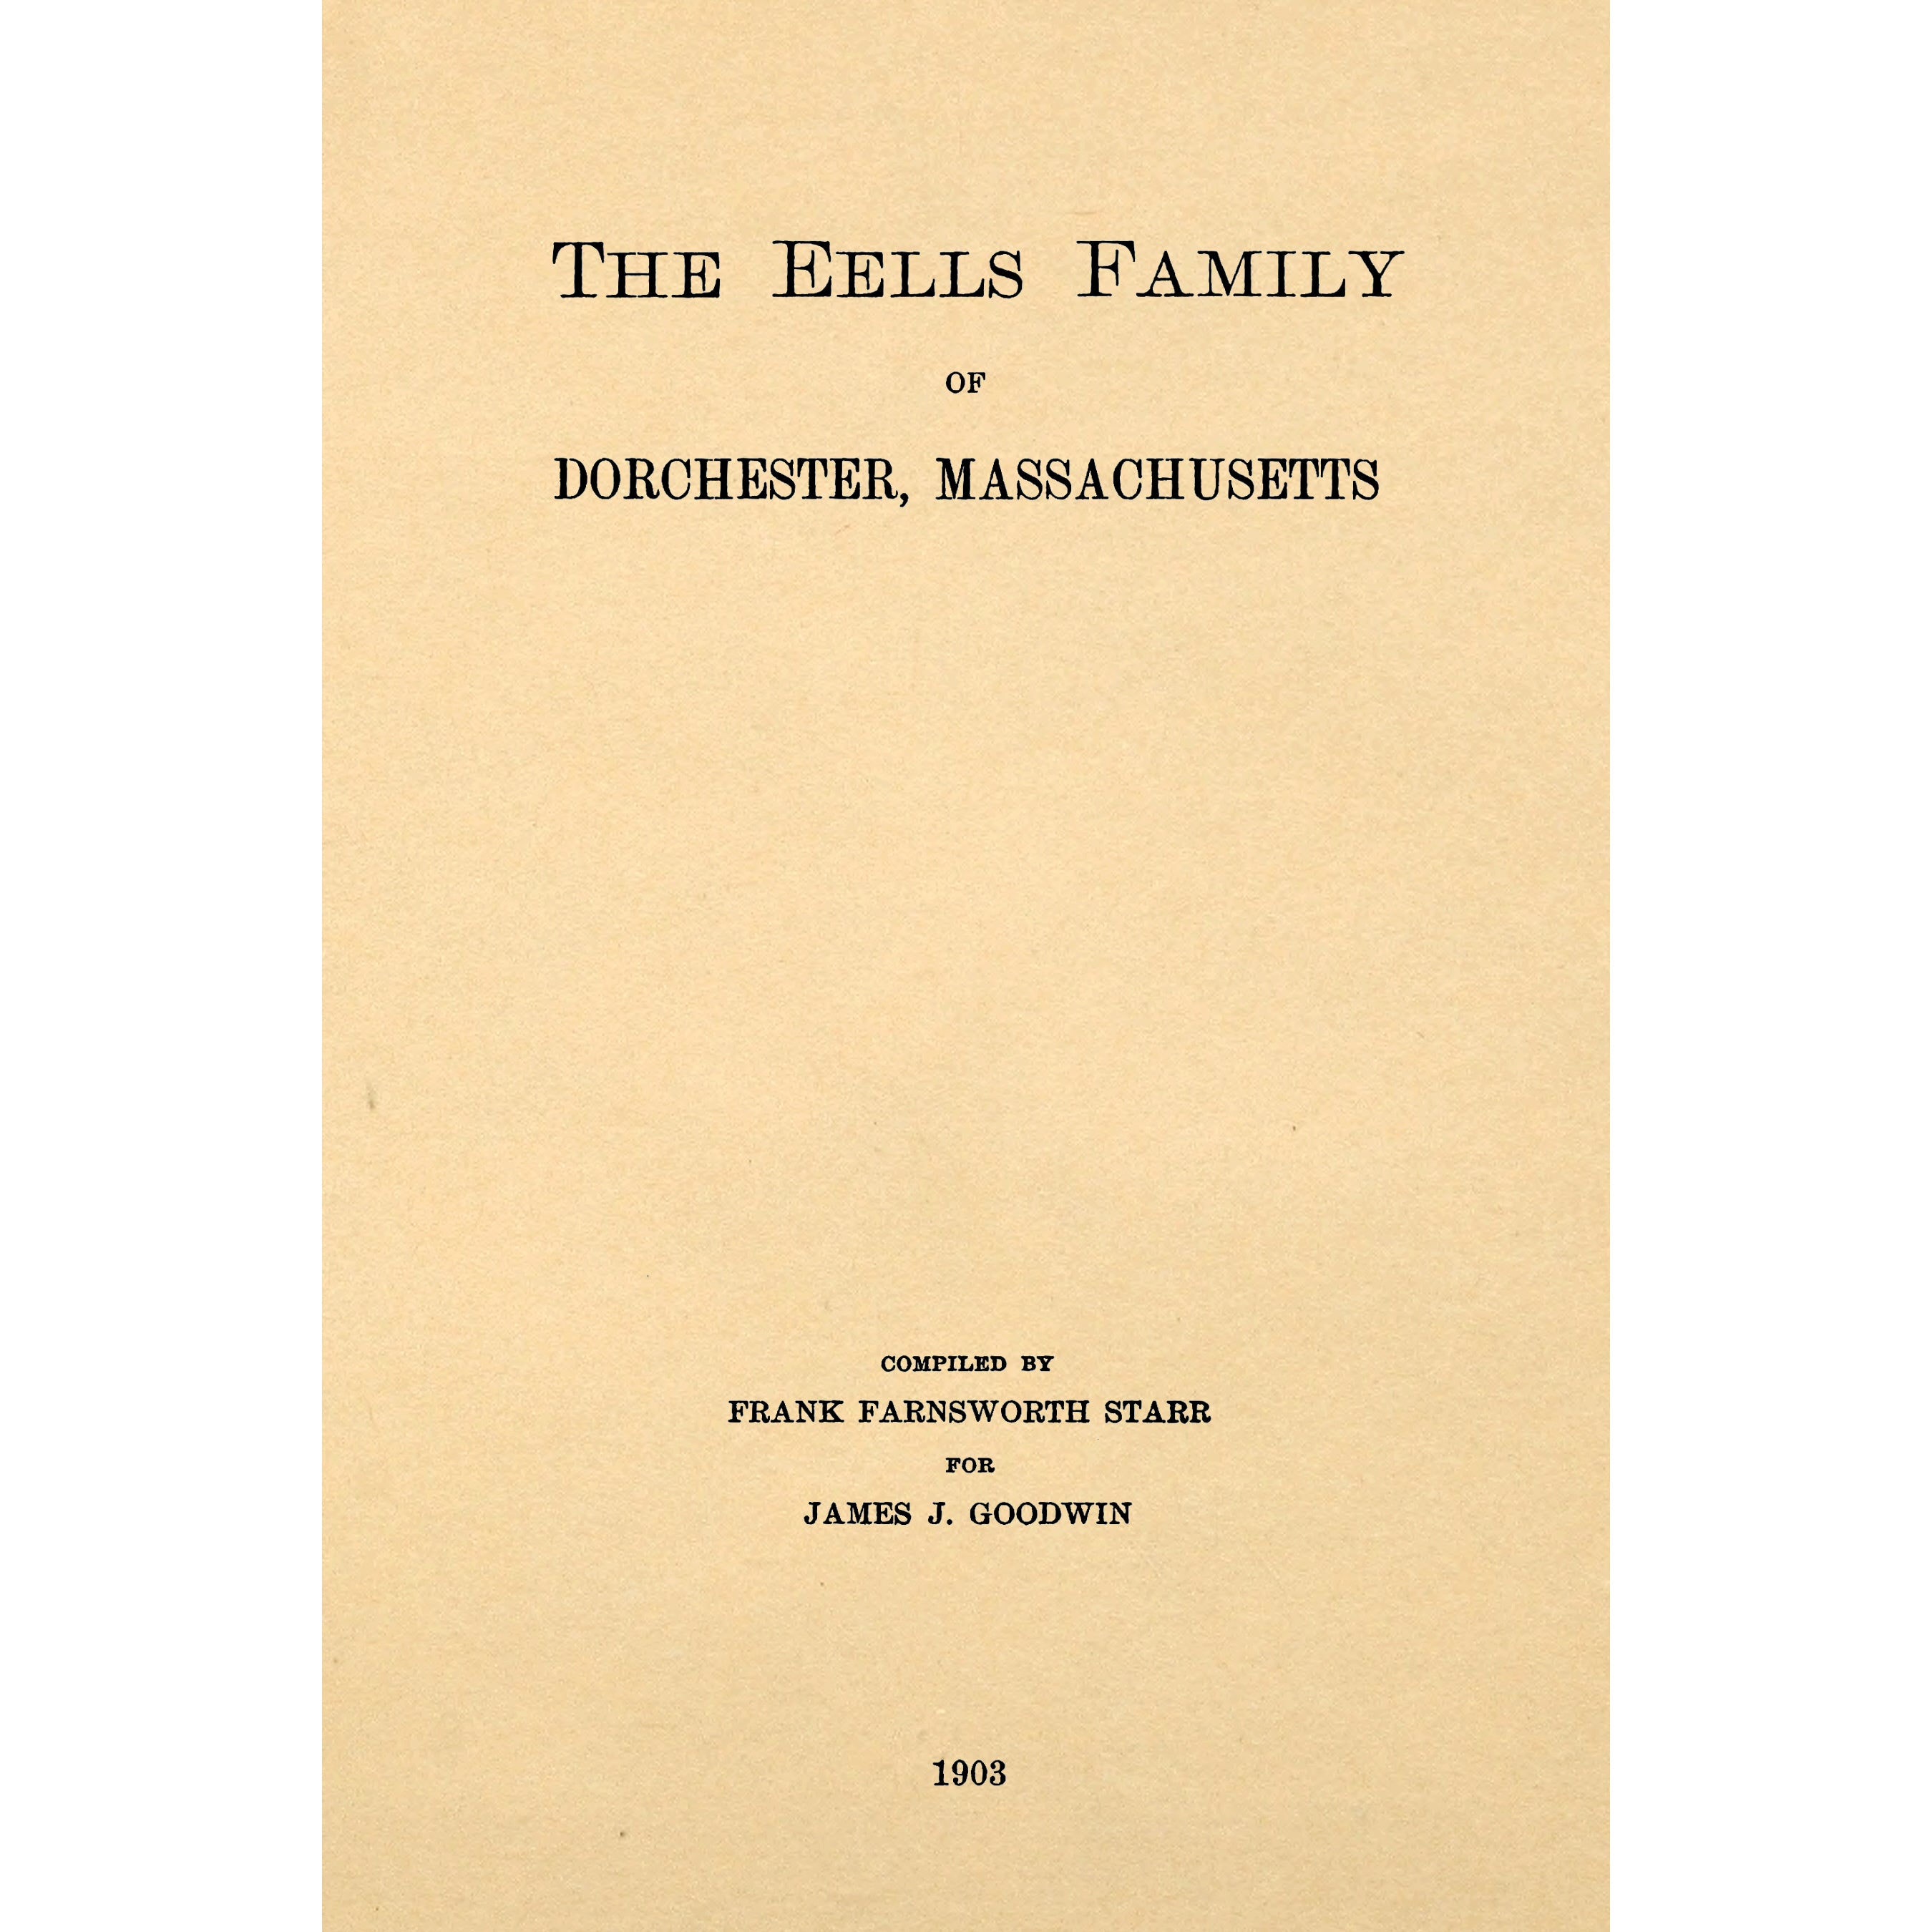 The Eells family of Dorchester, Massachusetts